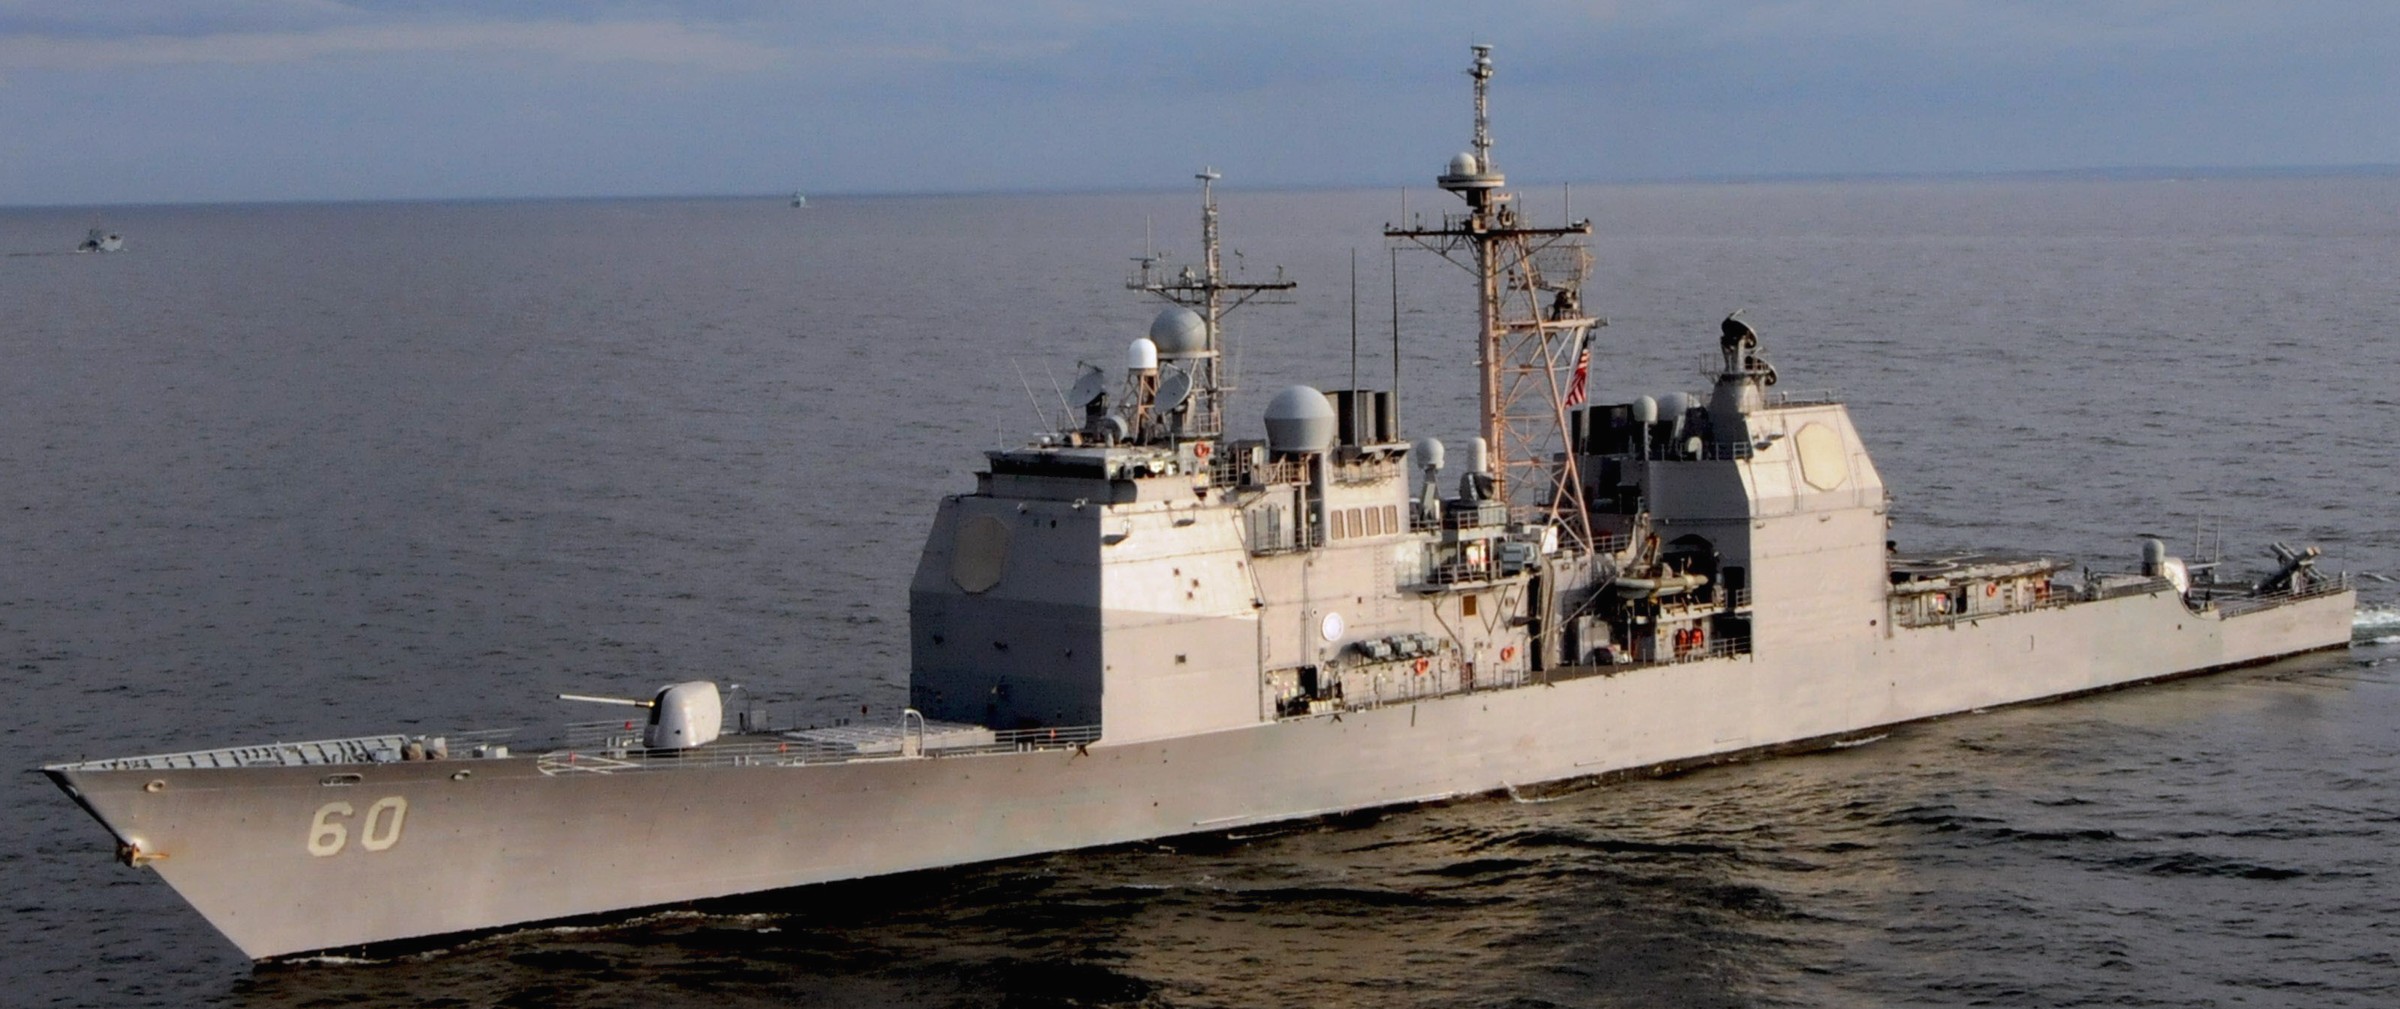 cg-60 uss normandy ticonderoga class guided missile cruiser aegis us navy baltops baltic sea 37